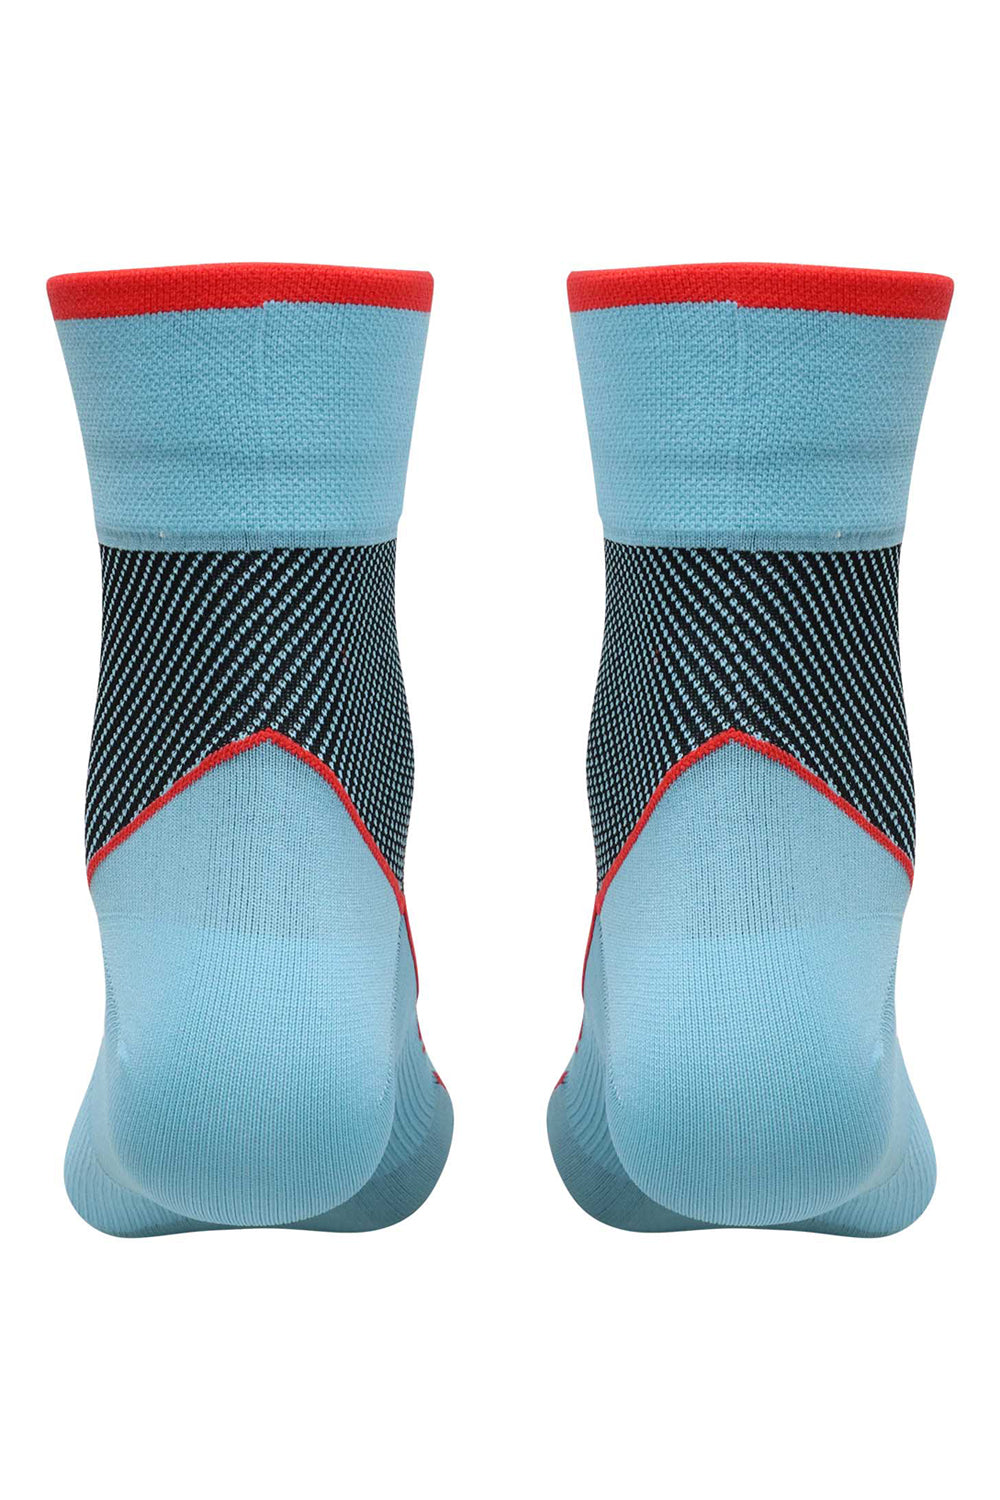 Sundried Blue Cycle Socks S21 Cycle Socks Activewear